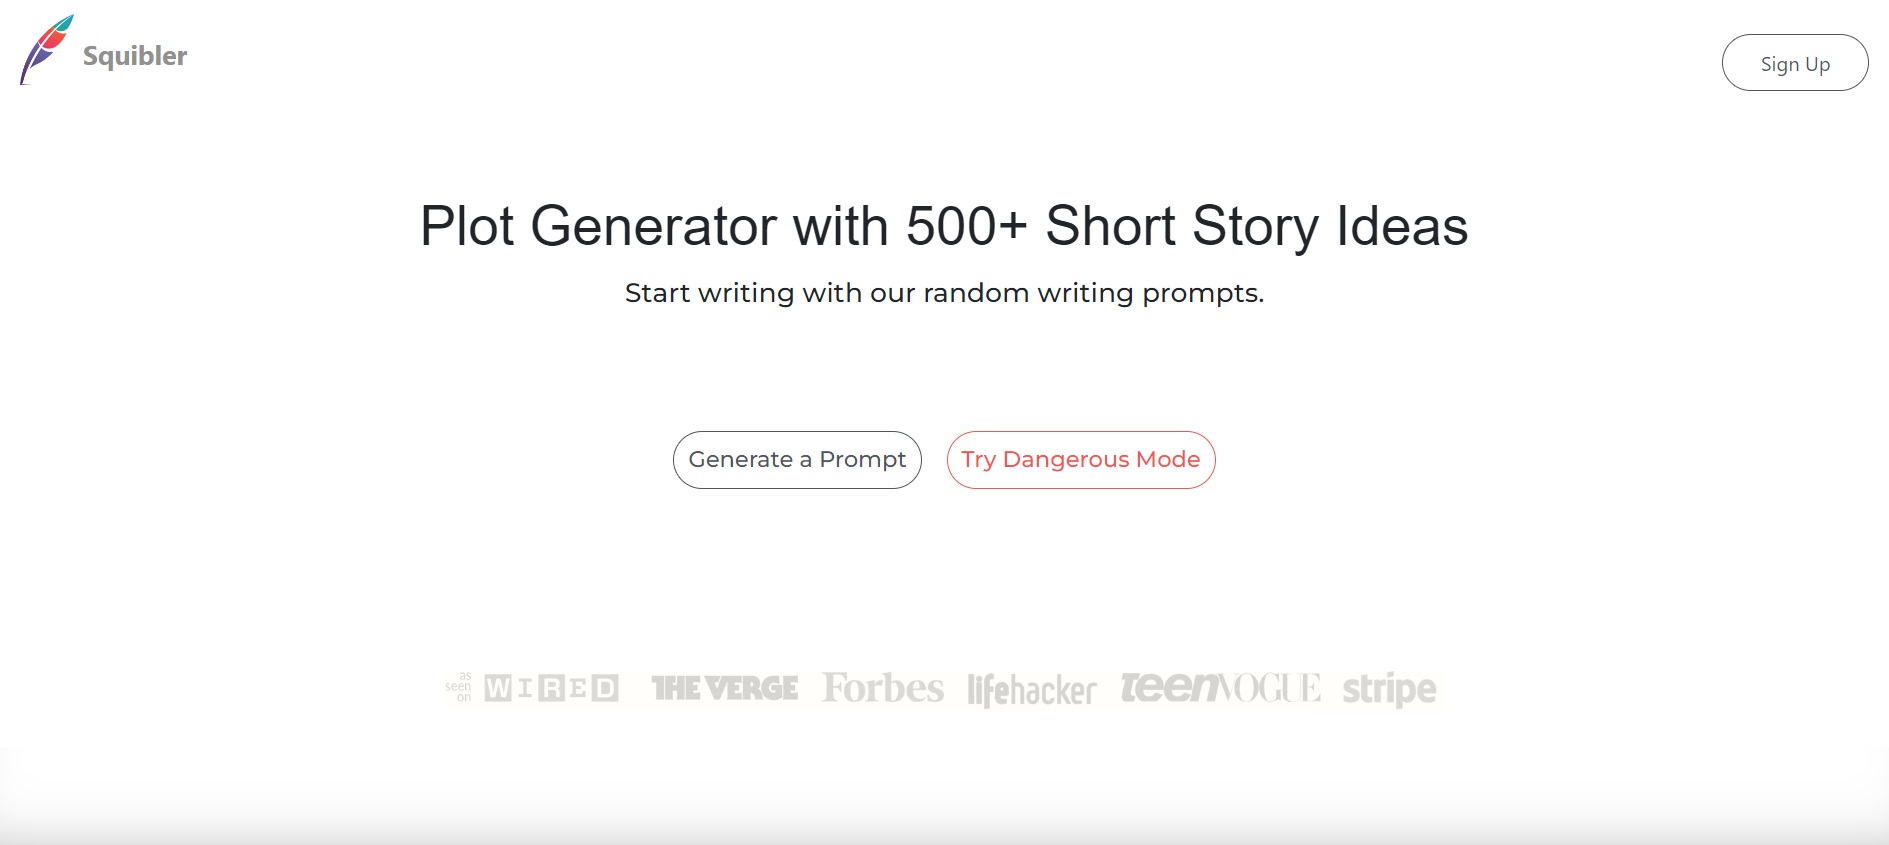 Story ideas generator Squibler Plot Generator